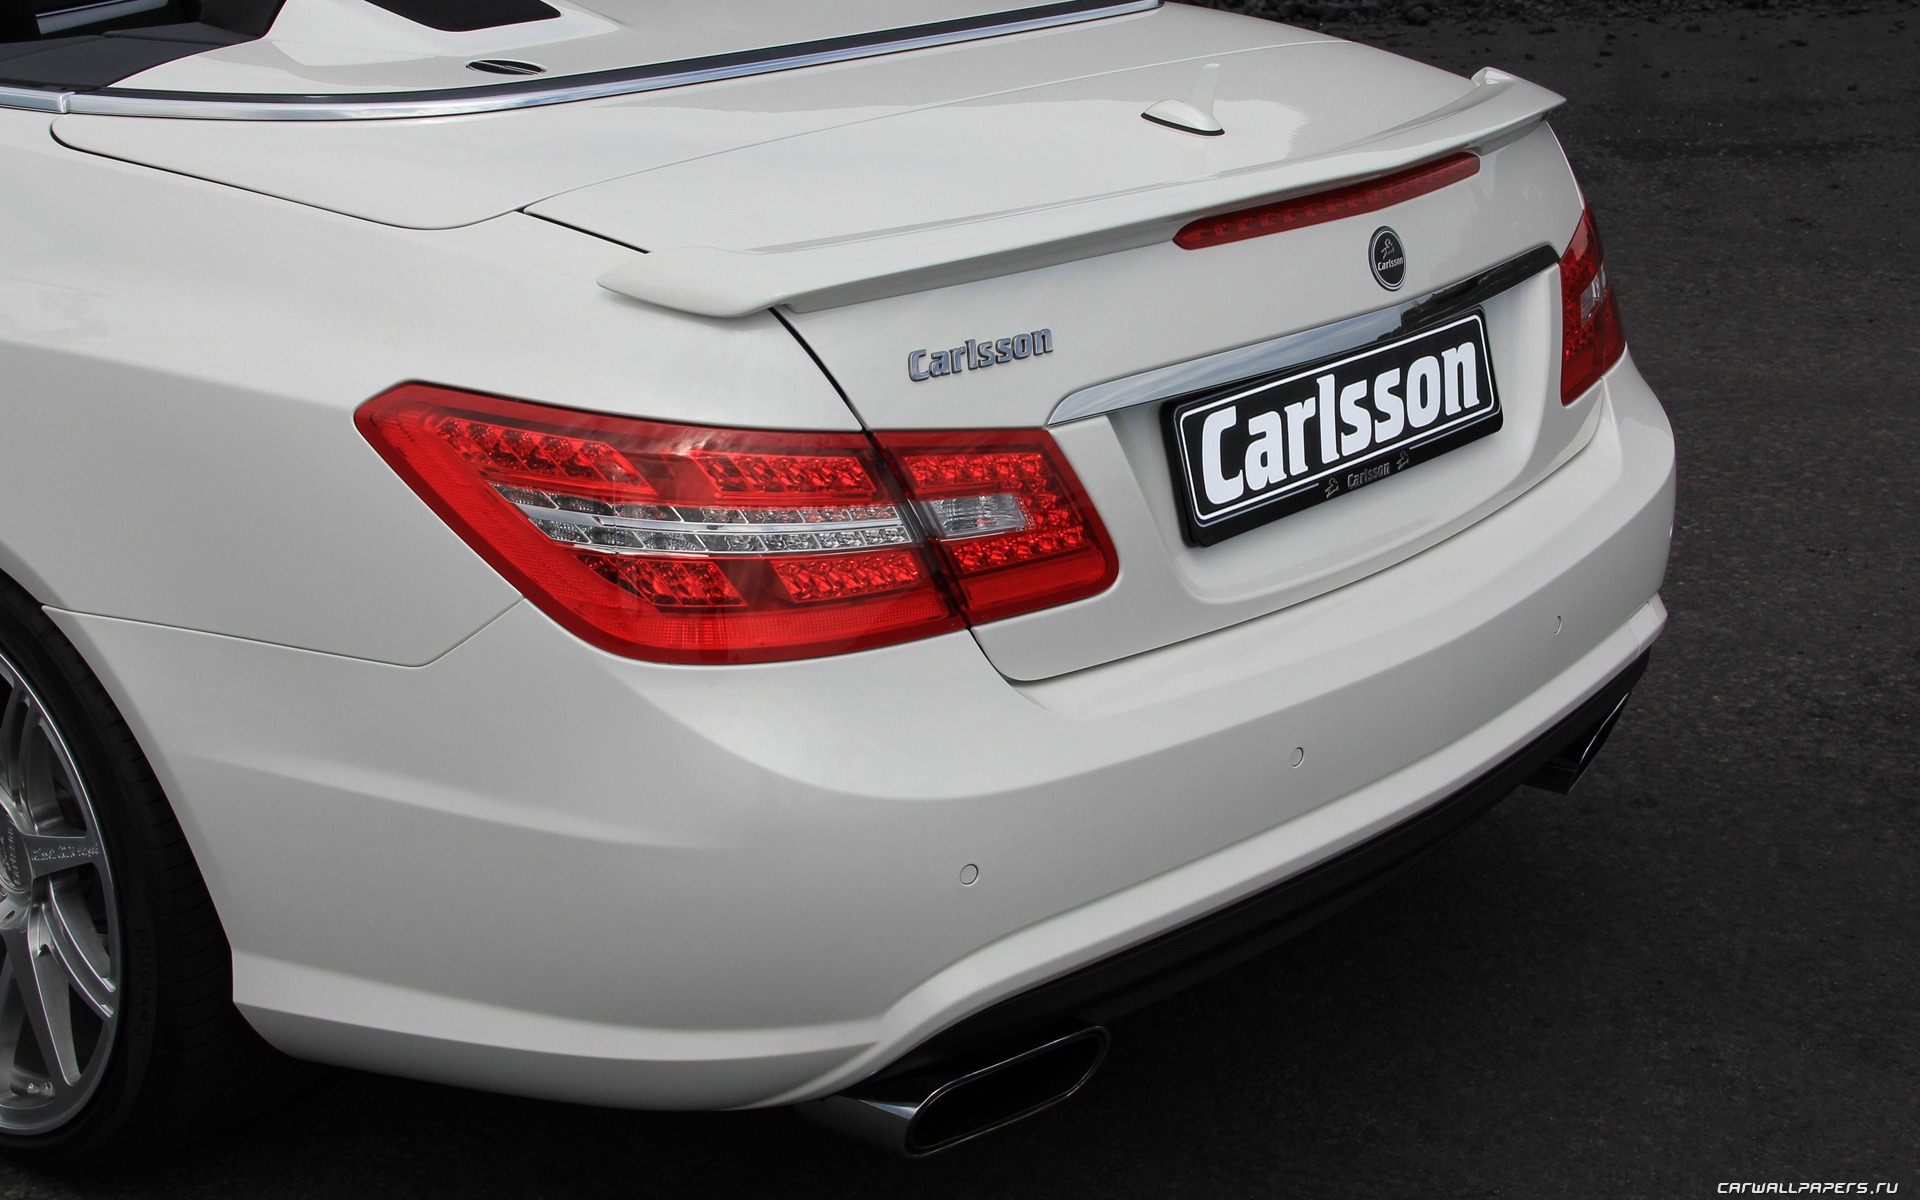 Carlsson Mercedes-Benz E-Class Cabriolet - 2010 高清壁纸20 - 1920x1200